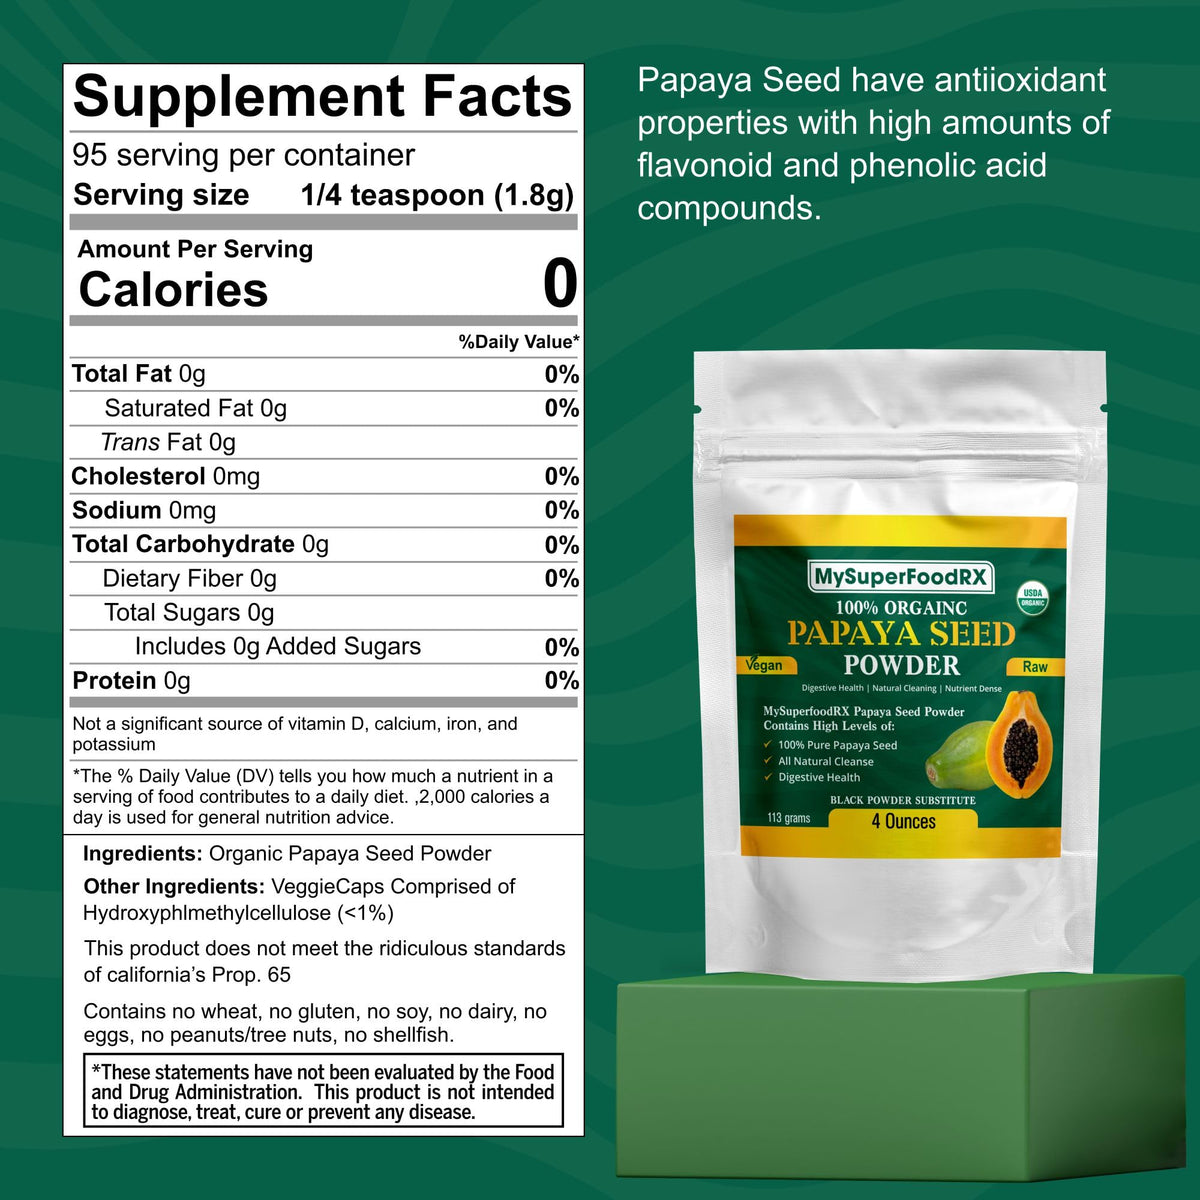 100% Organic Papaya Seed Powder - Antioxidant-Rich, Liver &amp; Kidney Support